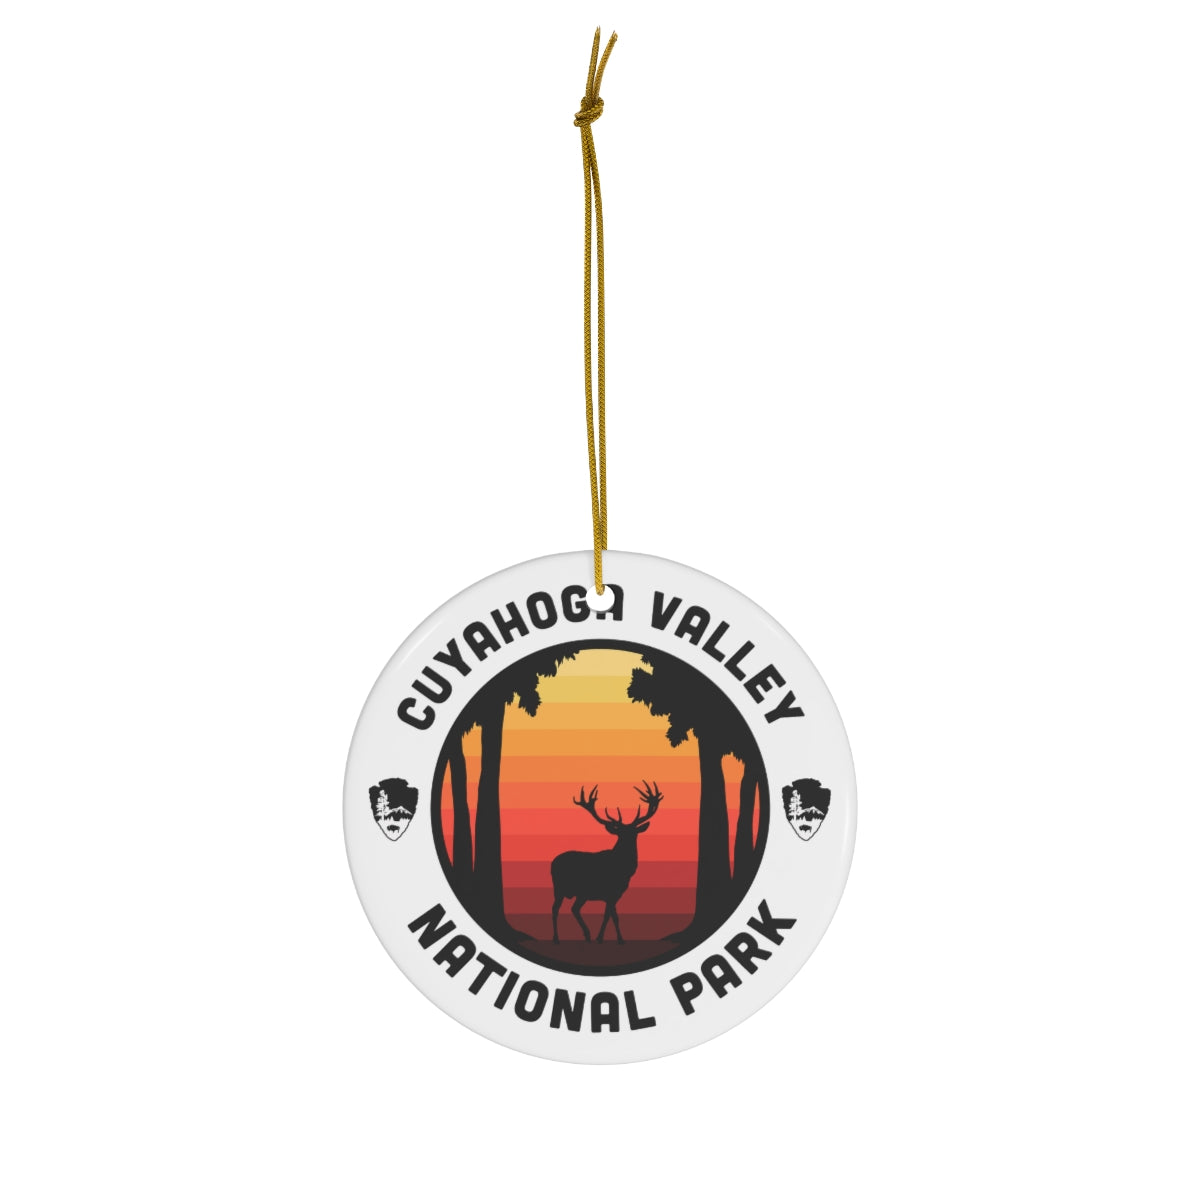 Cuyahoga Valley National Park Ornament - Round Emblem Design